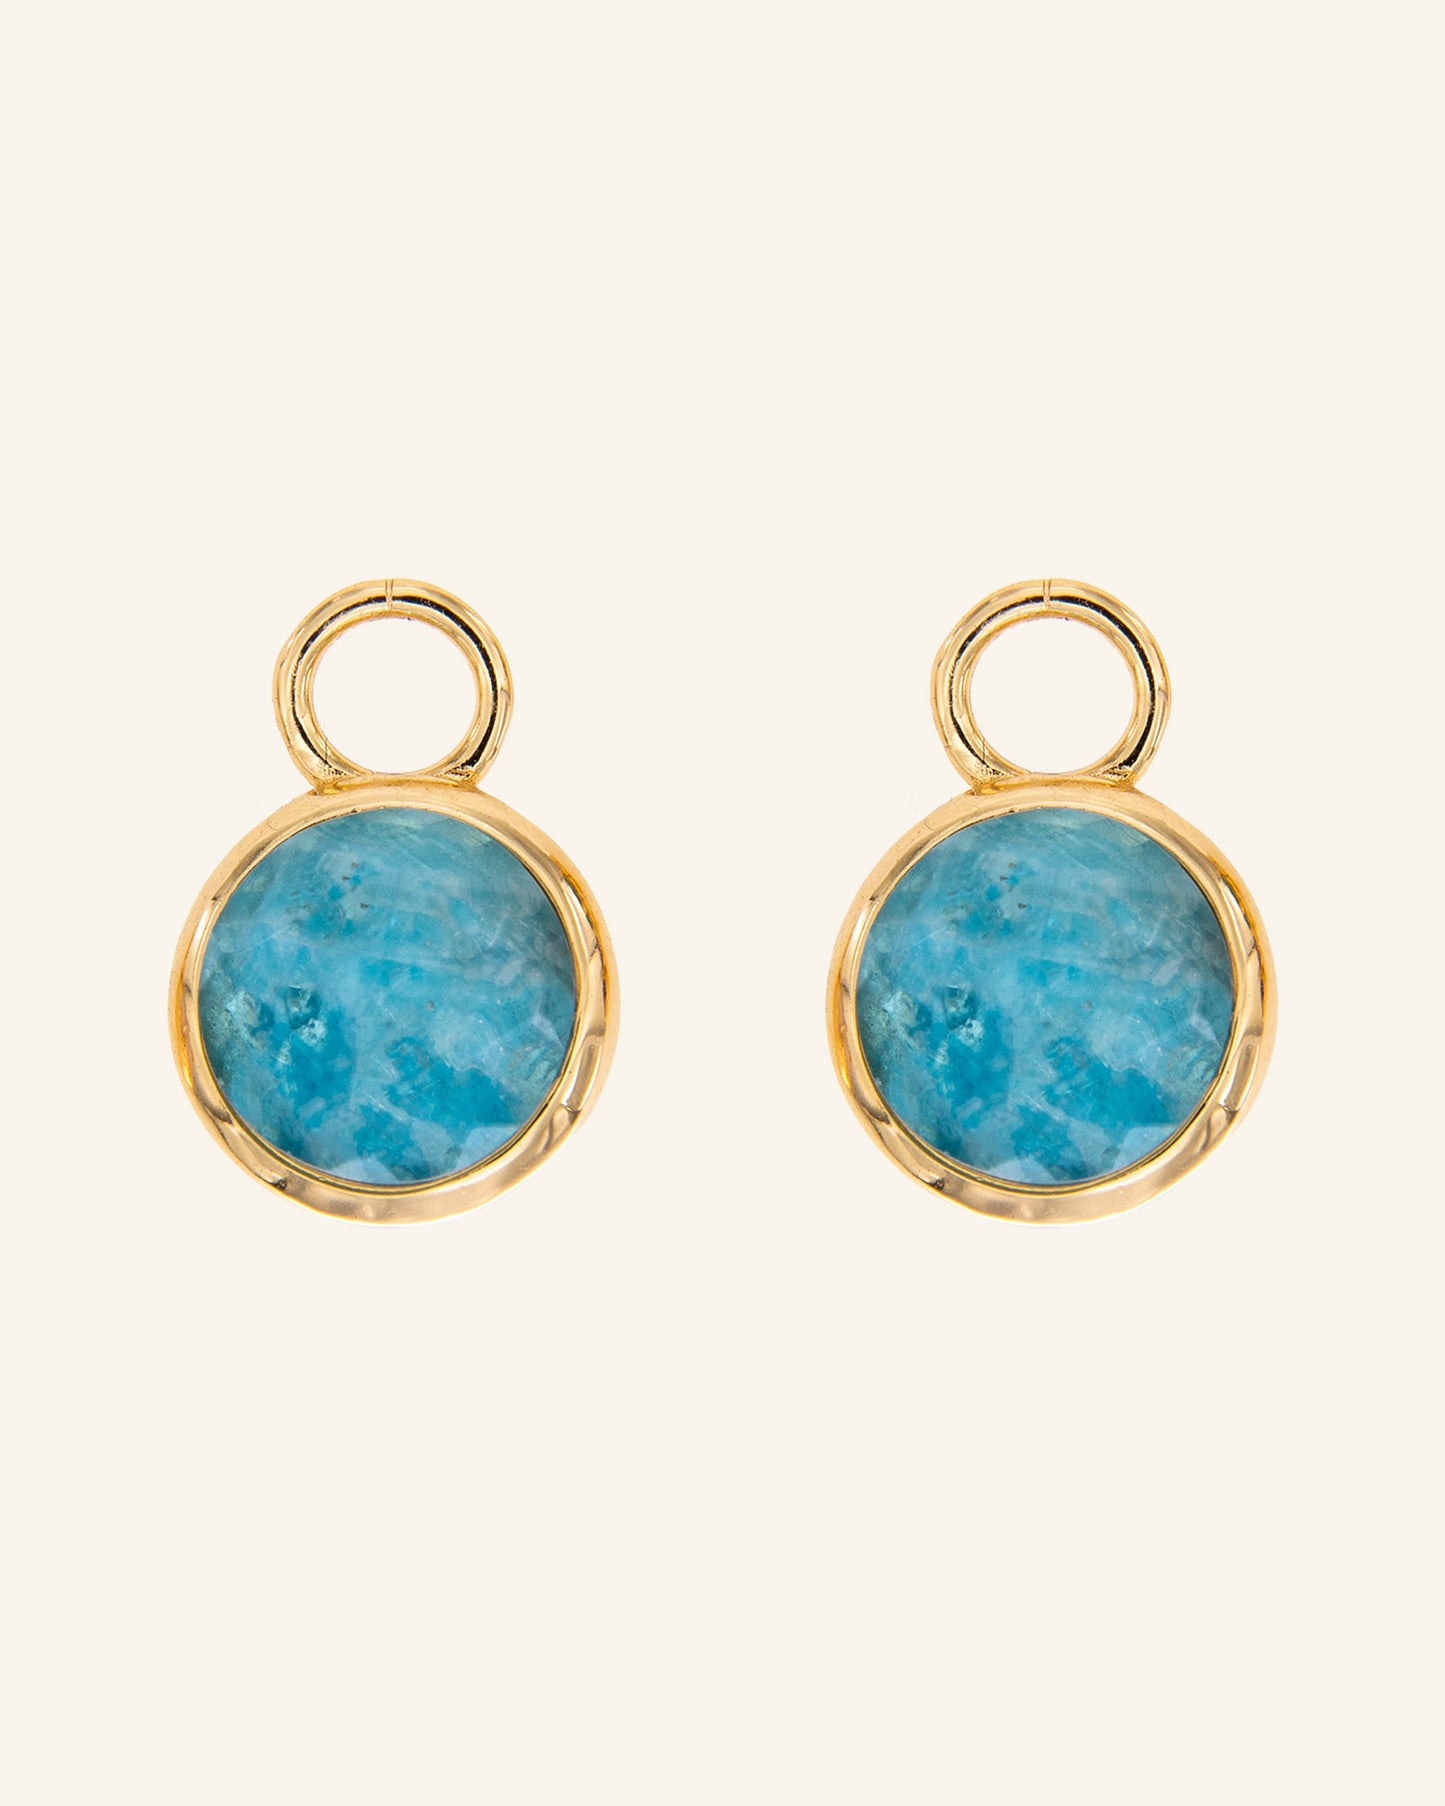 Pluvia pendants with blue apatite